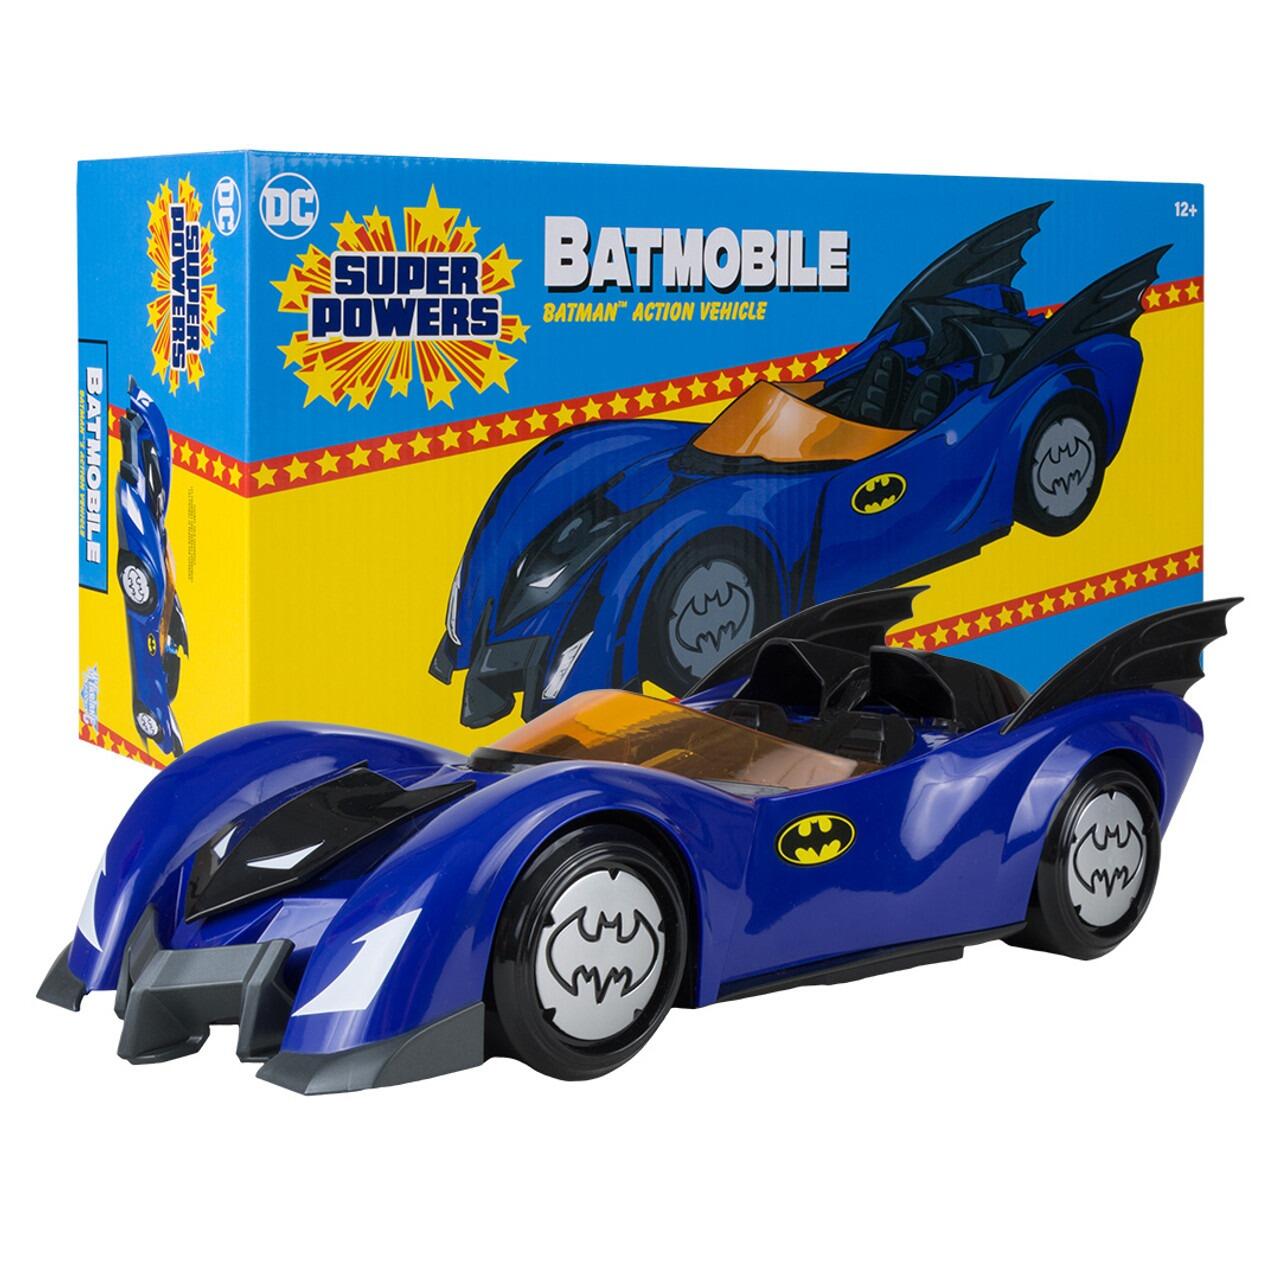 The Batman Movie Vehicle Drifter Motorcycle Figurine Mcfarlane